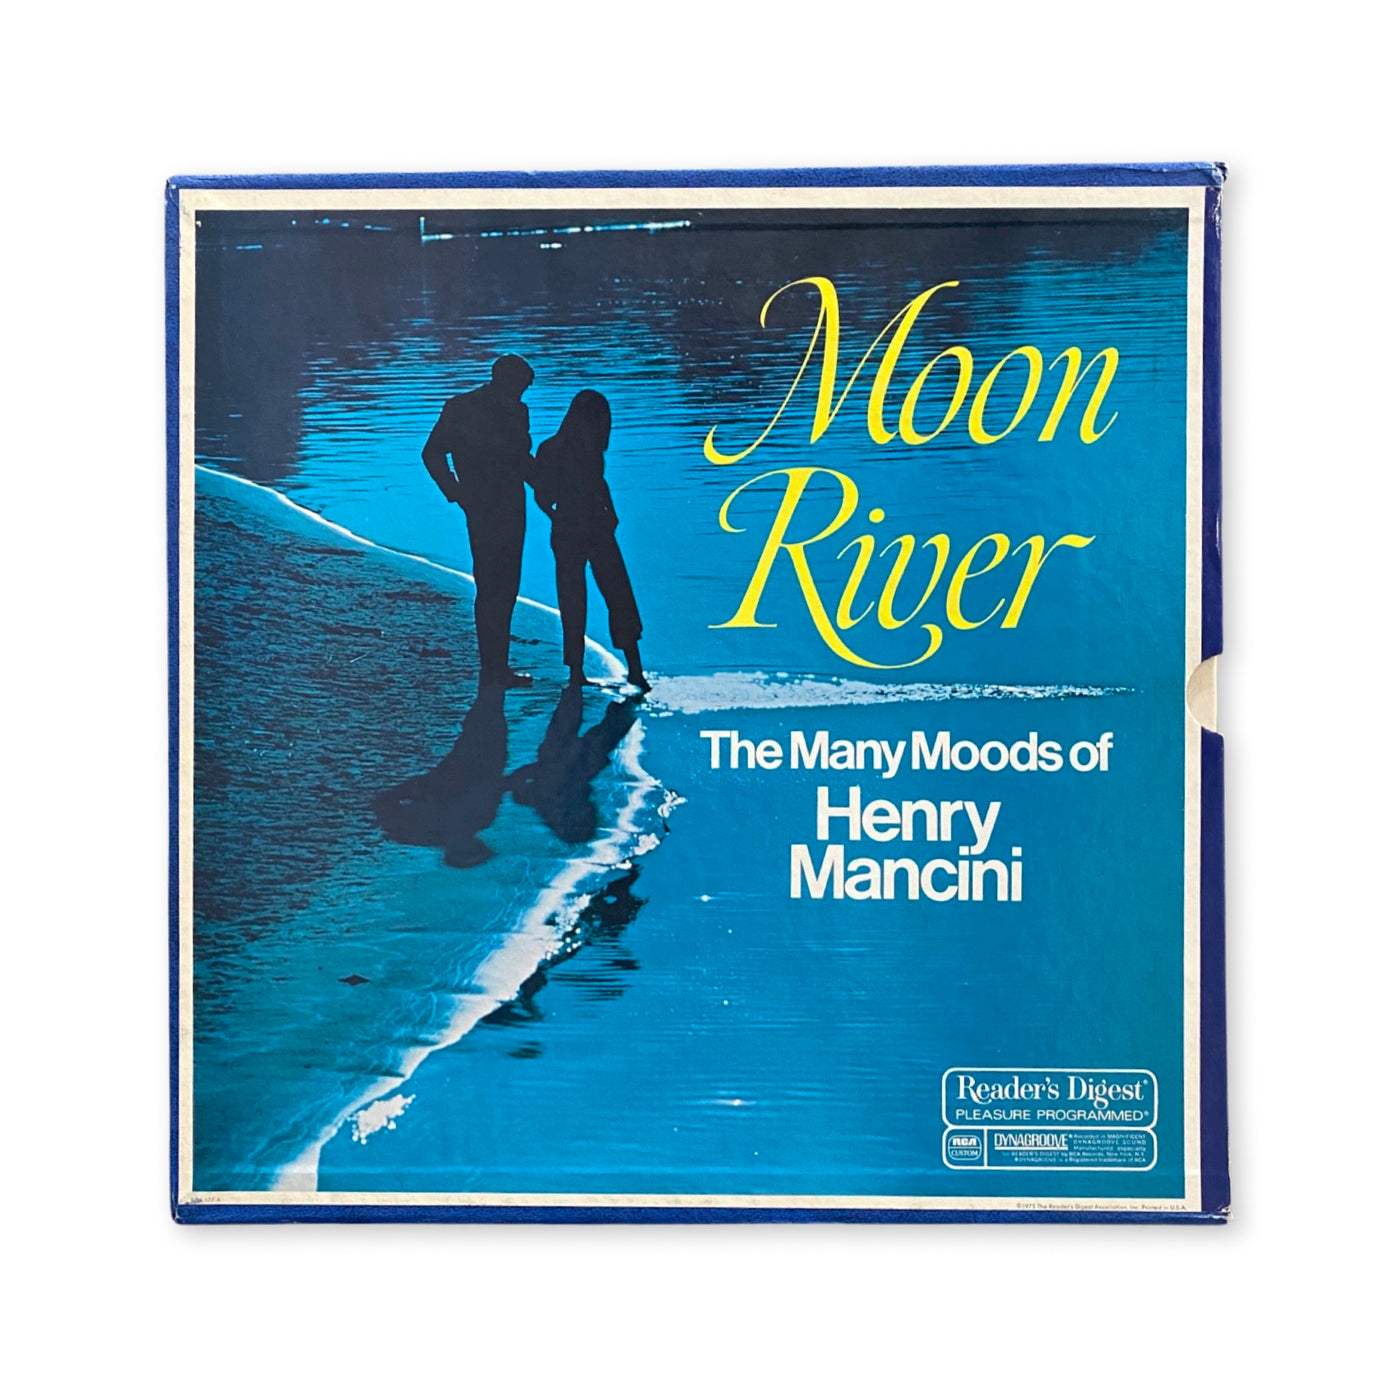 Henry Mancini - Moon River The Many Moods Of Henry Mancini Box Set